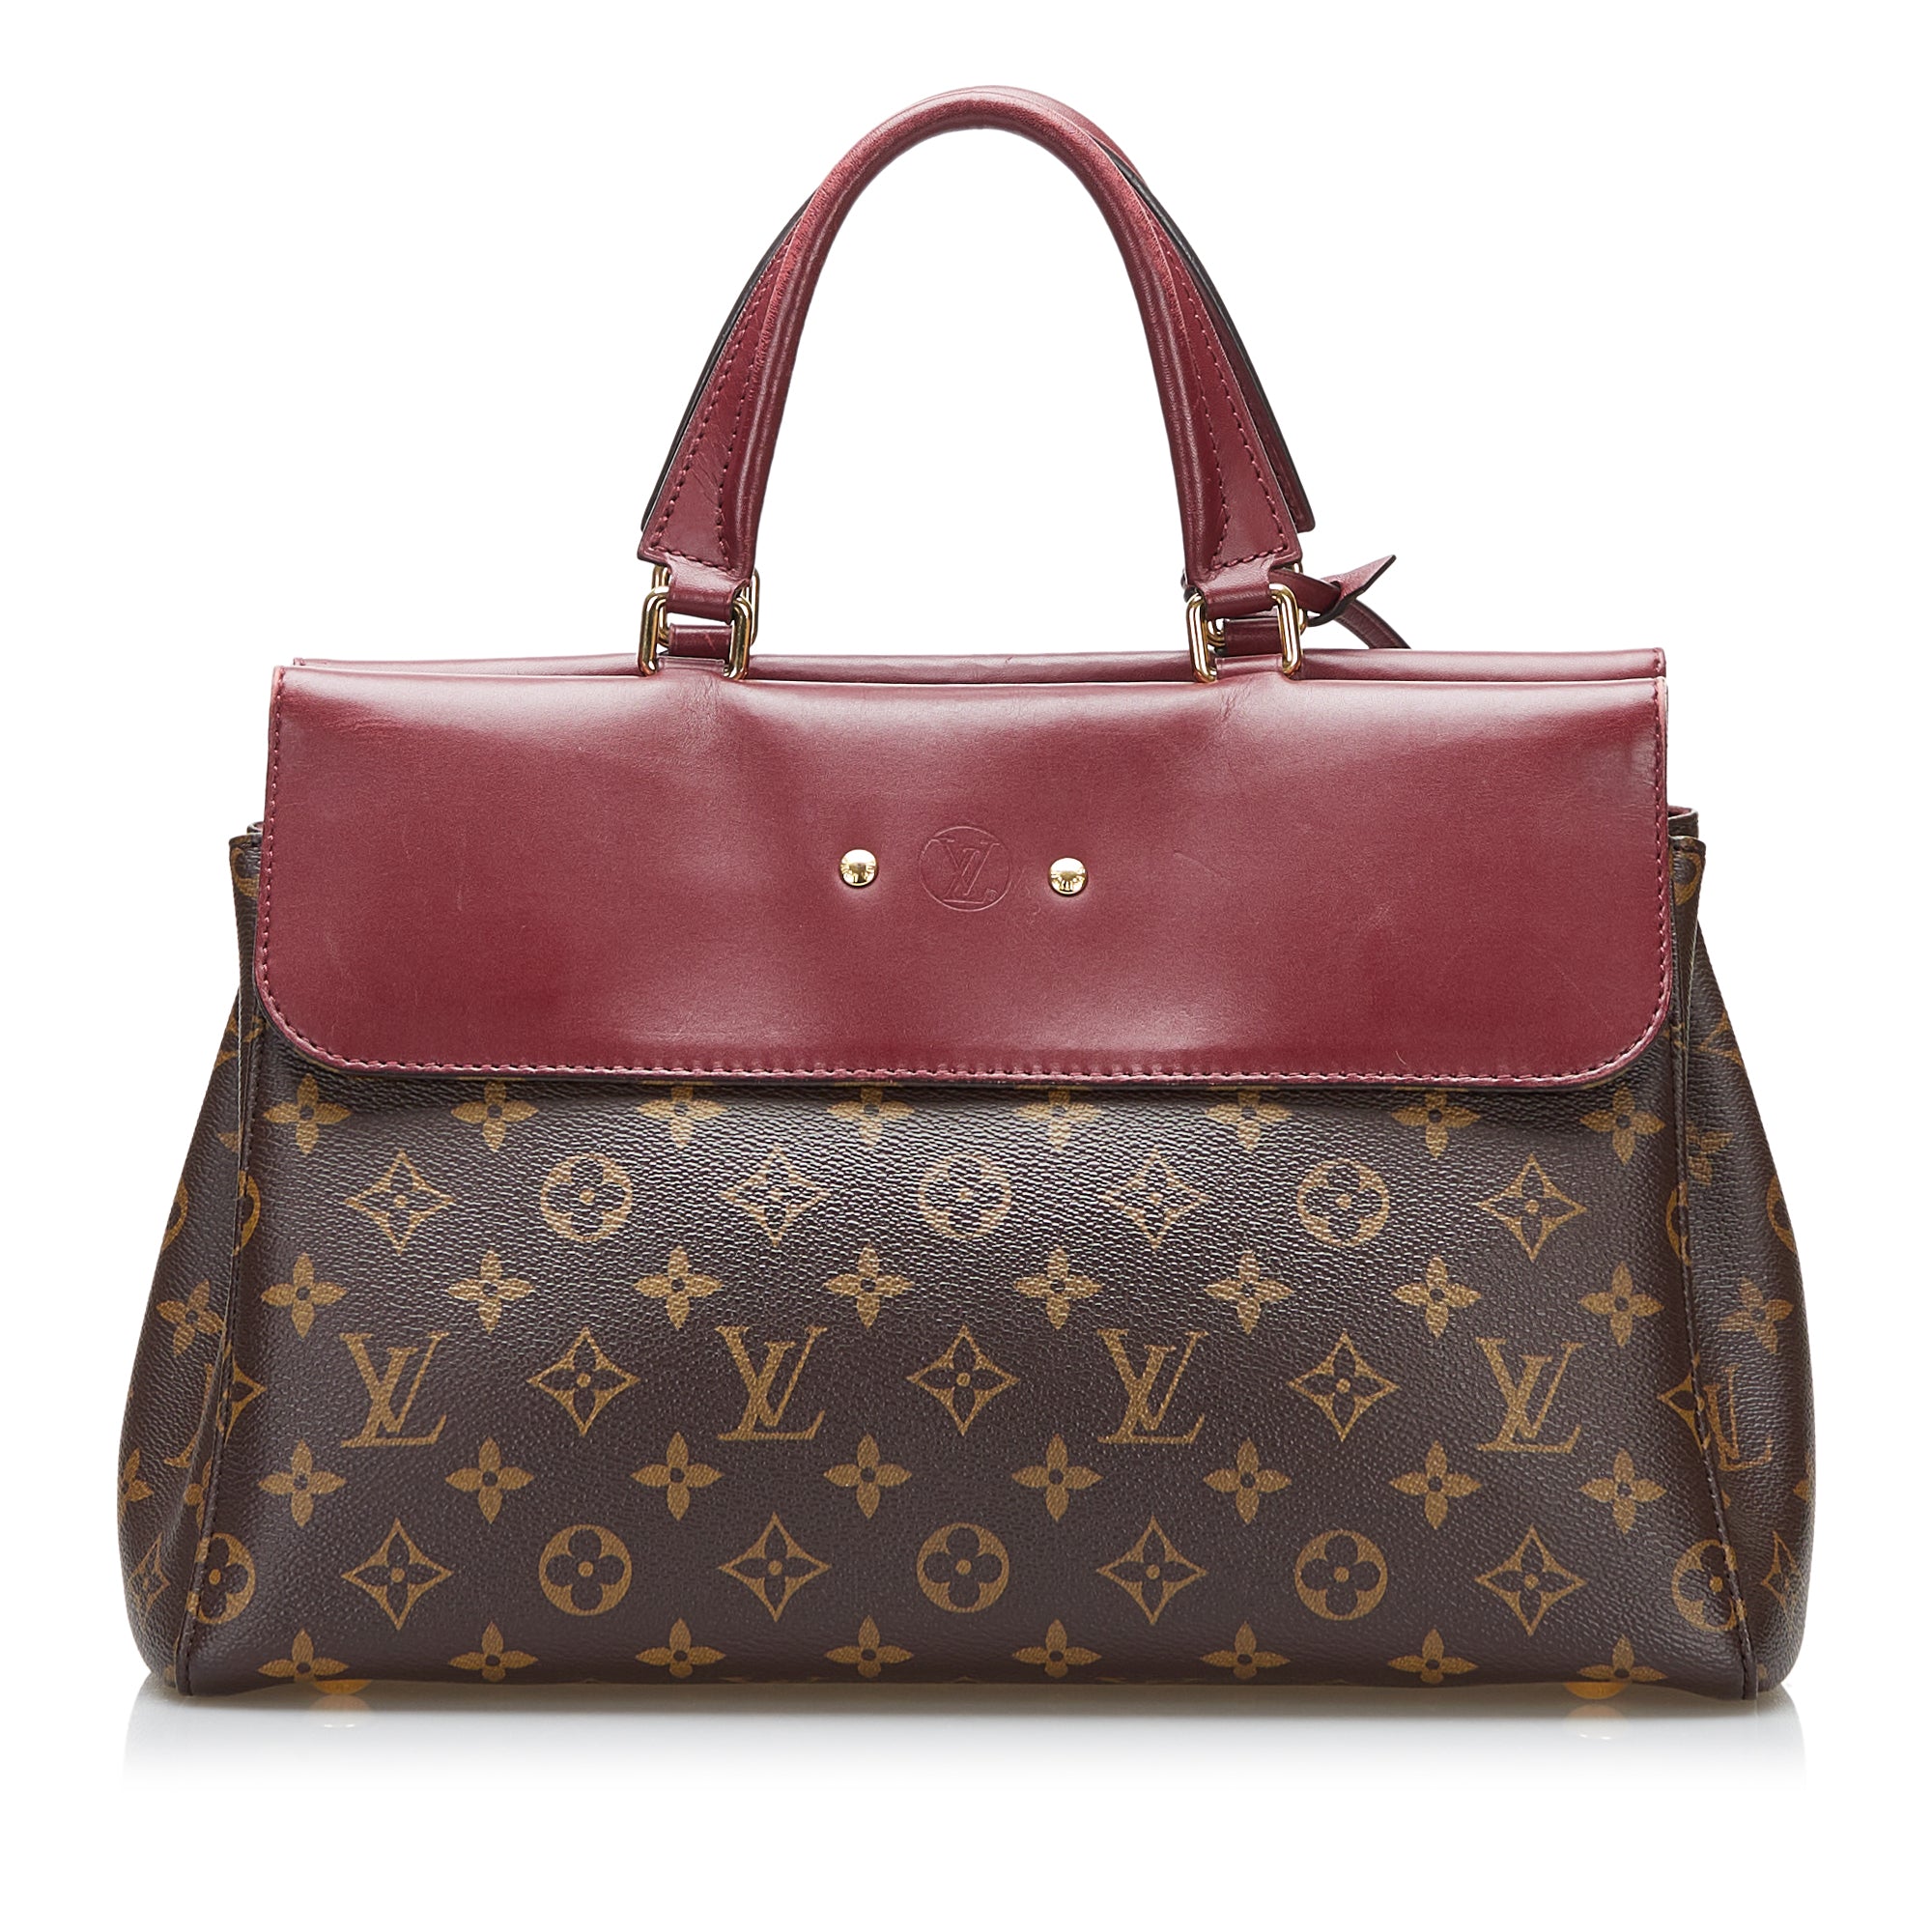 Louis Vuitton - Authenticated Saintonge Handbag - Leather Black For Woman, Very Good condition